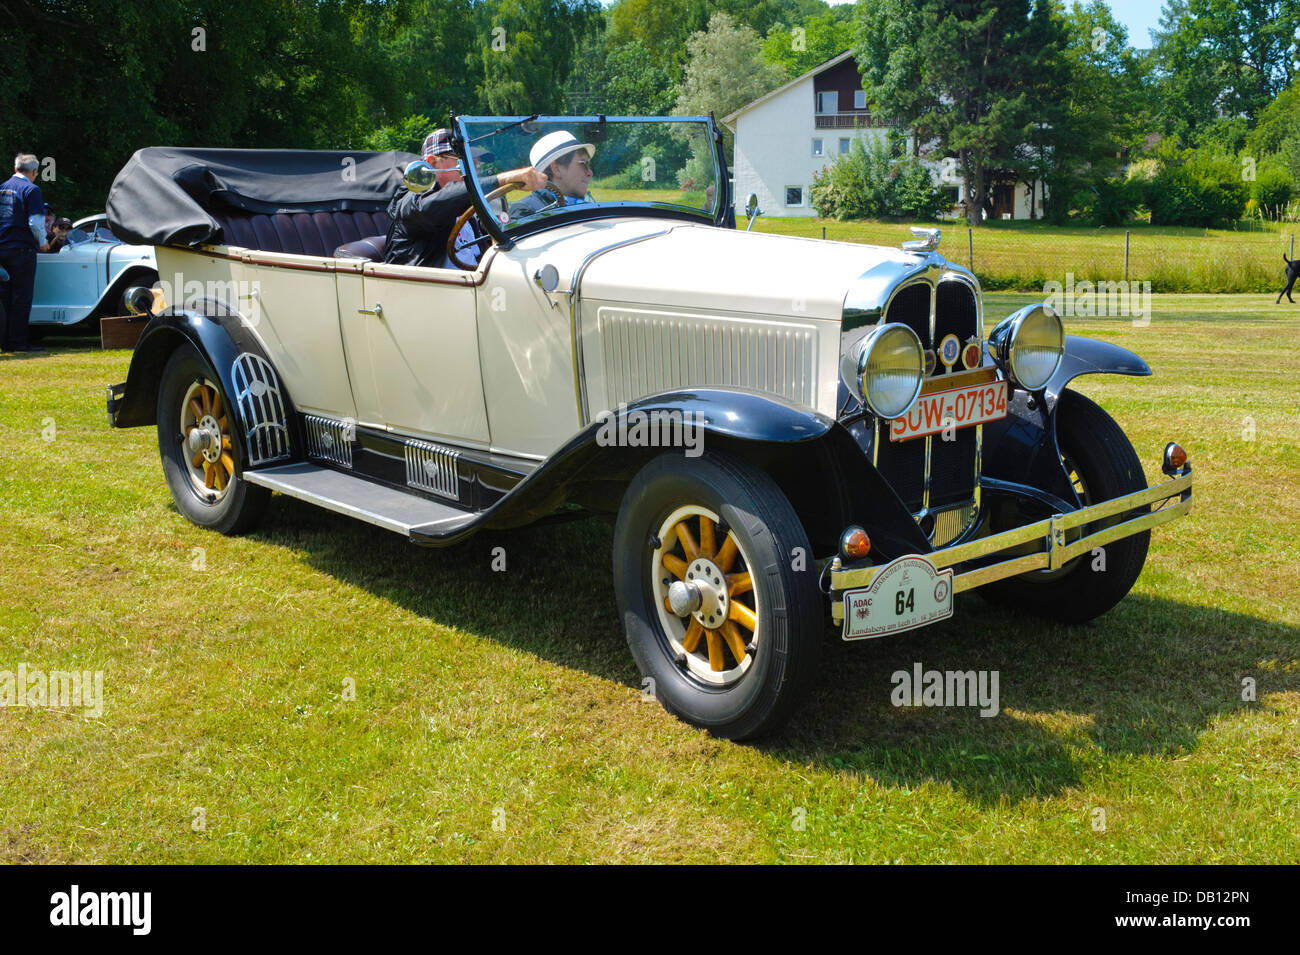 Pontiac open Tourer, built at year 1929, photo taken on July 13, 2013 in Landsberg, Germany Stock Photo